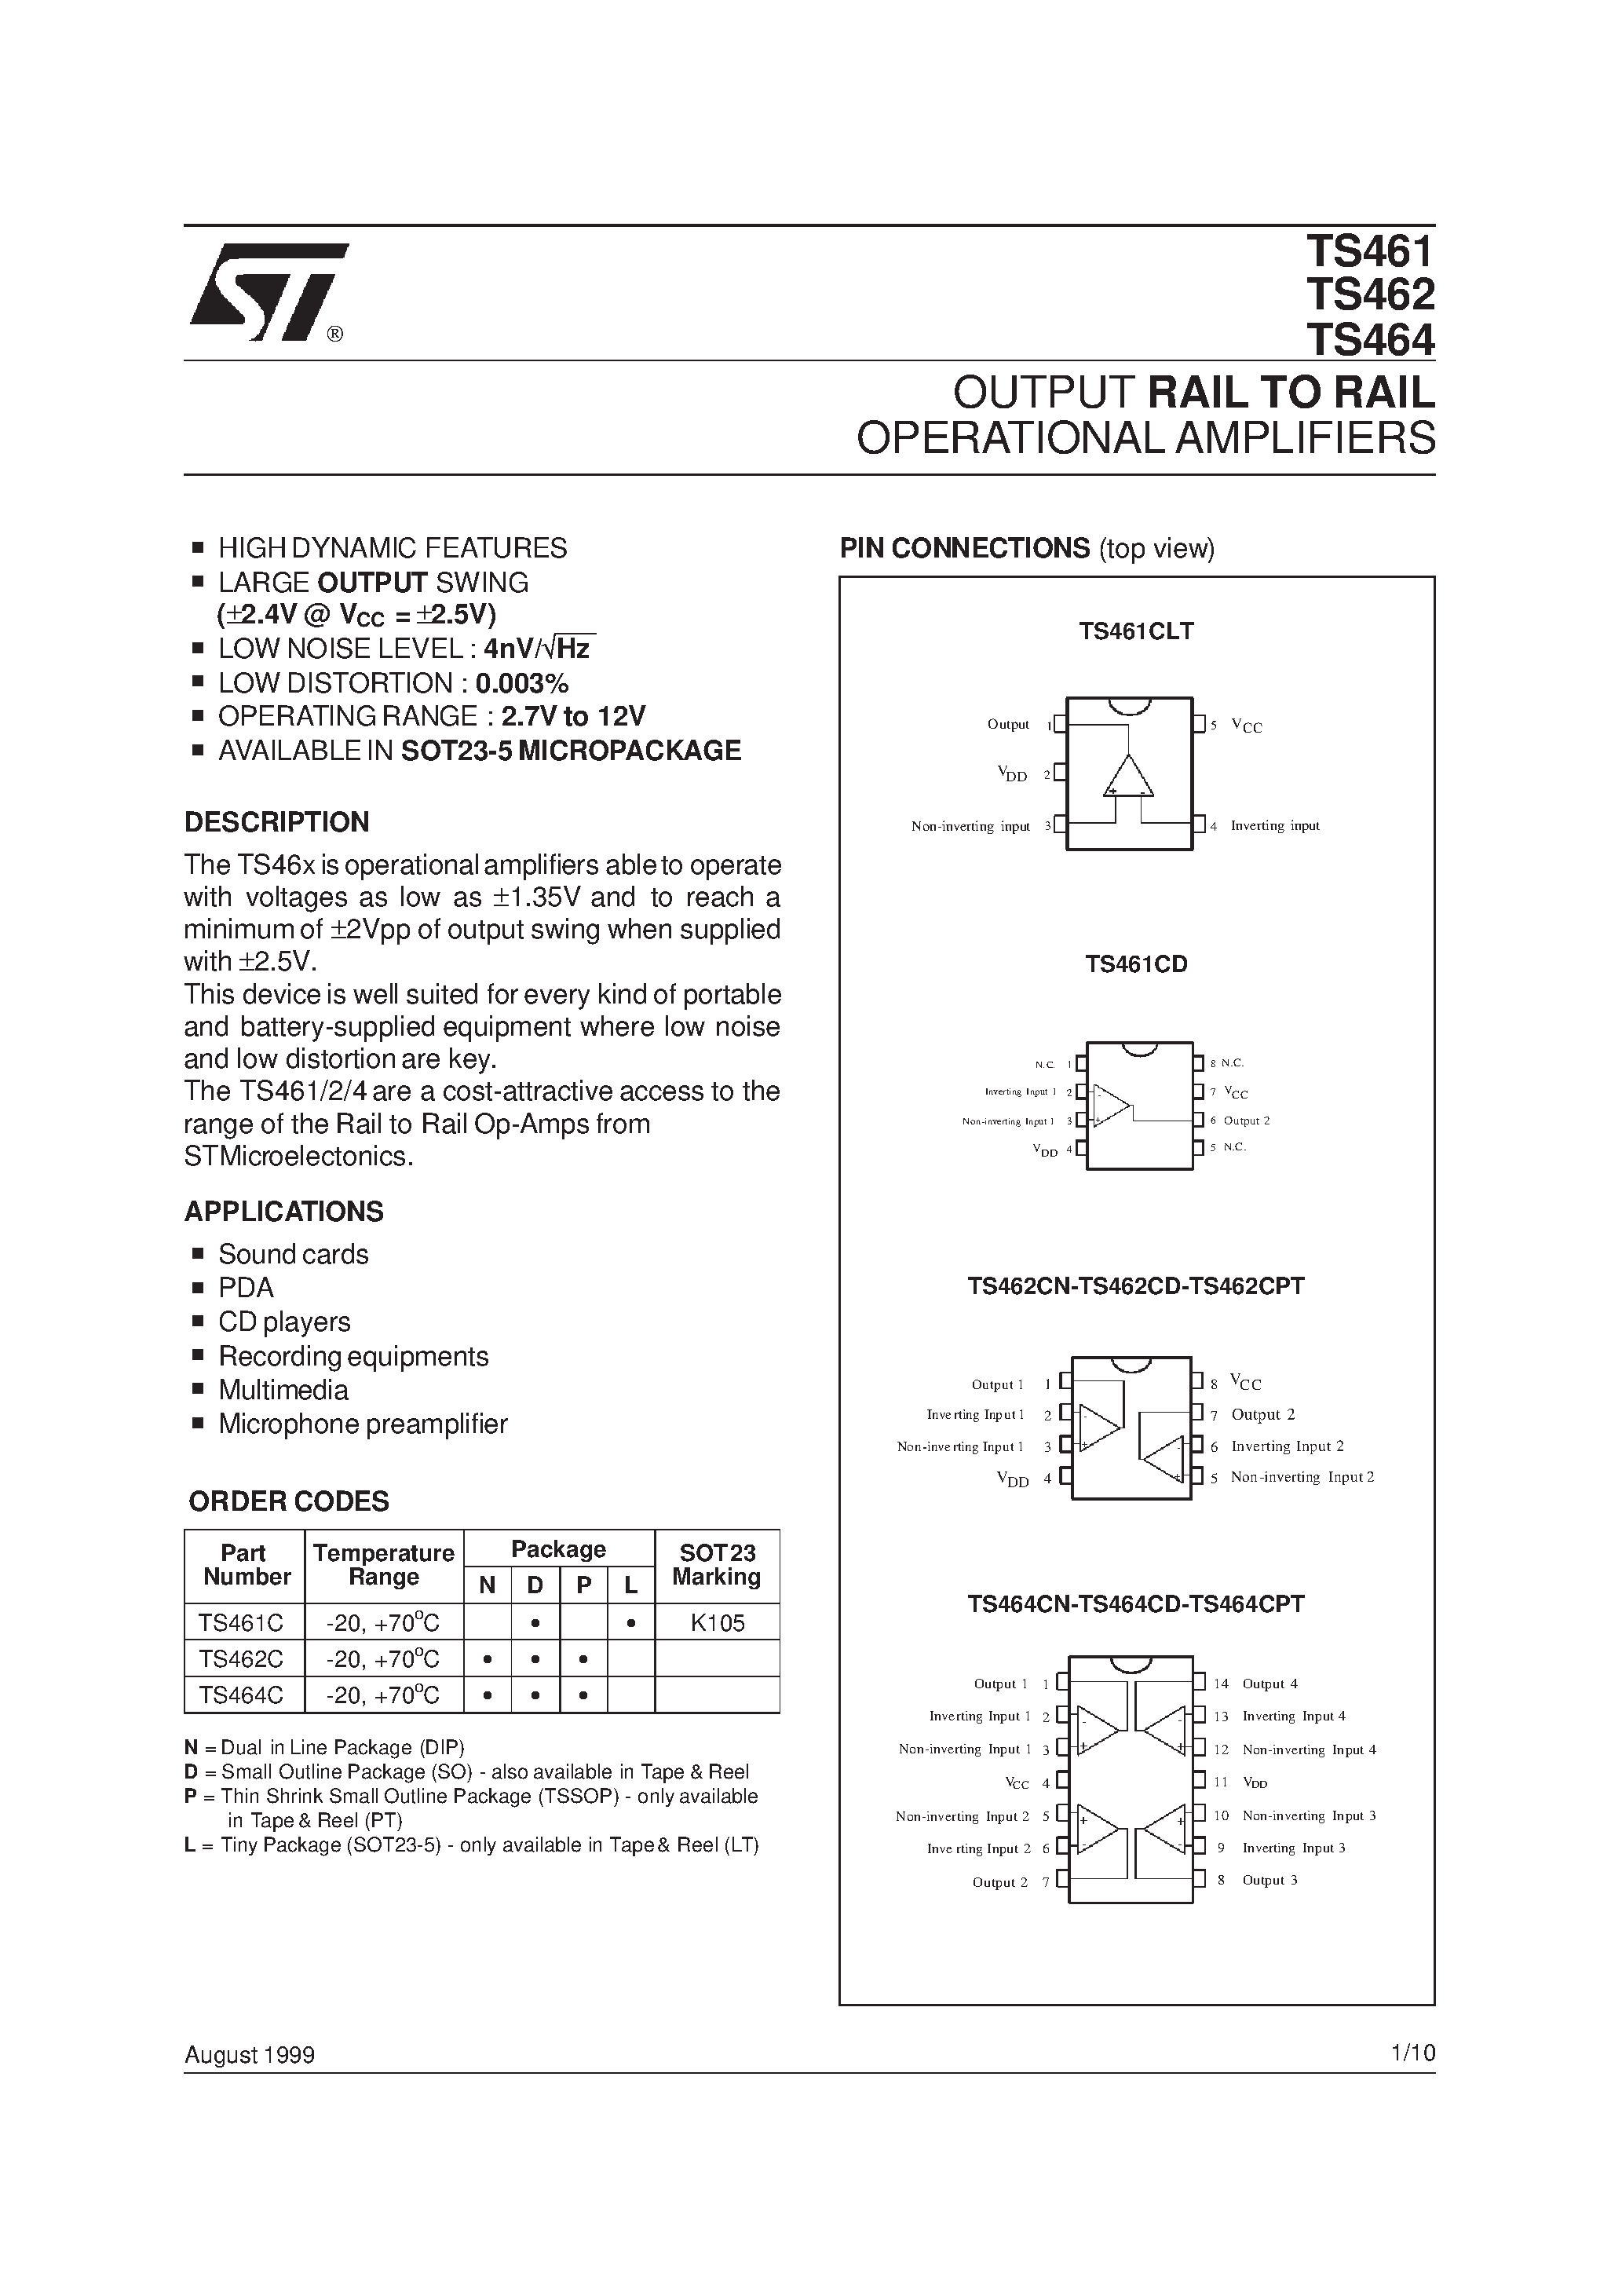 Даташит TS461CD - OUTPUT RAIL TO RAIL OPERATIONAL AMPLIFIERS страница 1